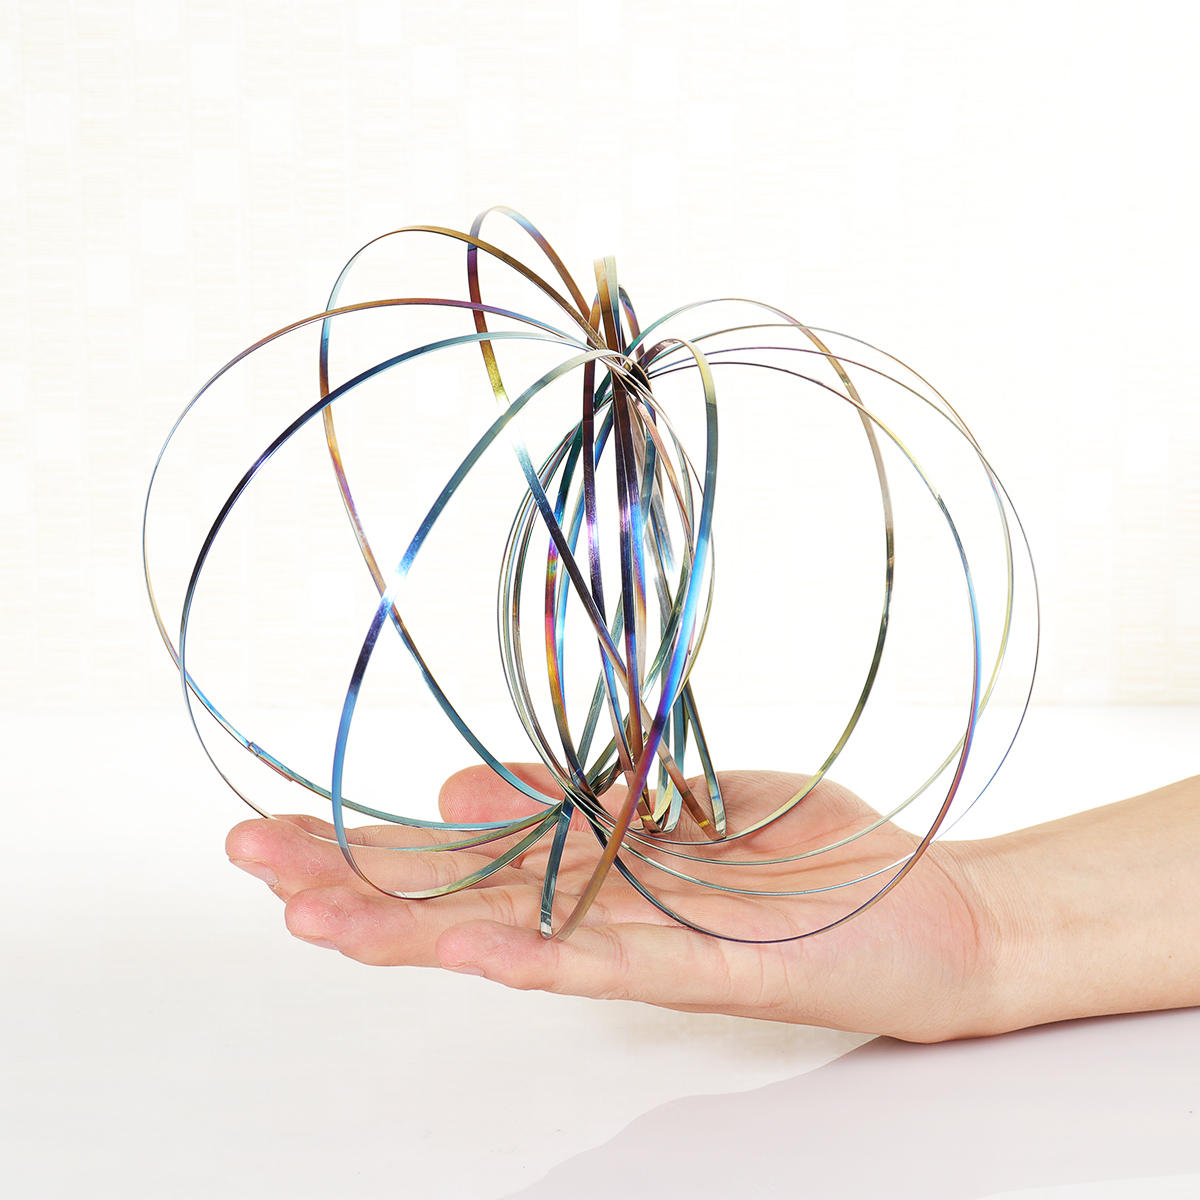 2-PACK Magic Flow Ring Slinky 3D Fun Kinetic Spring Infinity Arm Juggle Toys US 